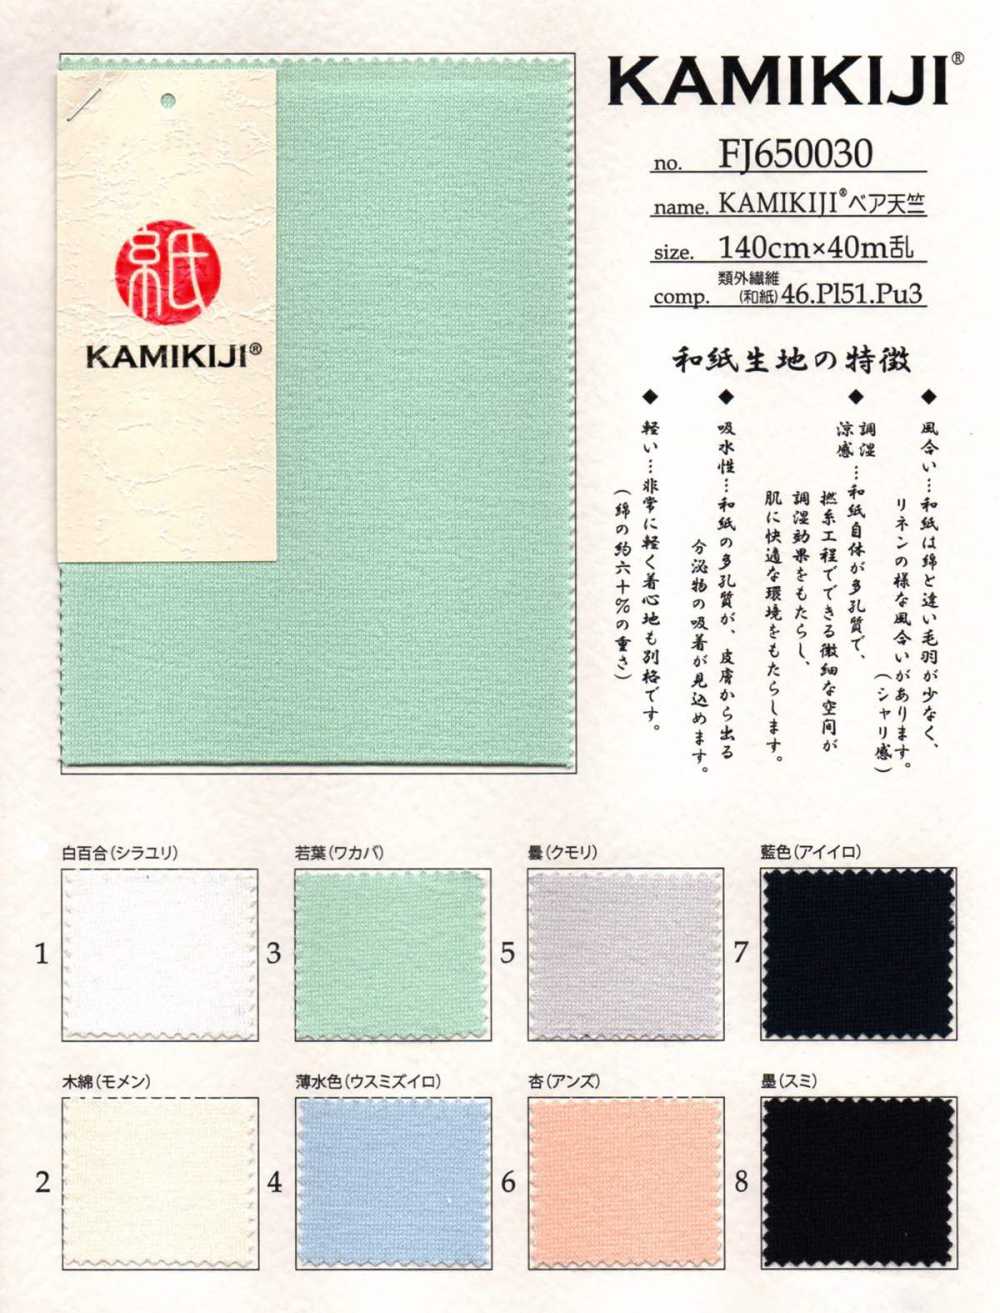 FJ650030 Maillot Nu KAMIKIJI®[Fabrication De Textile] Fujisaki Textile